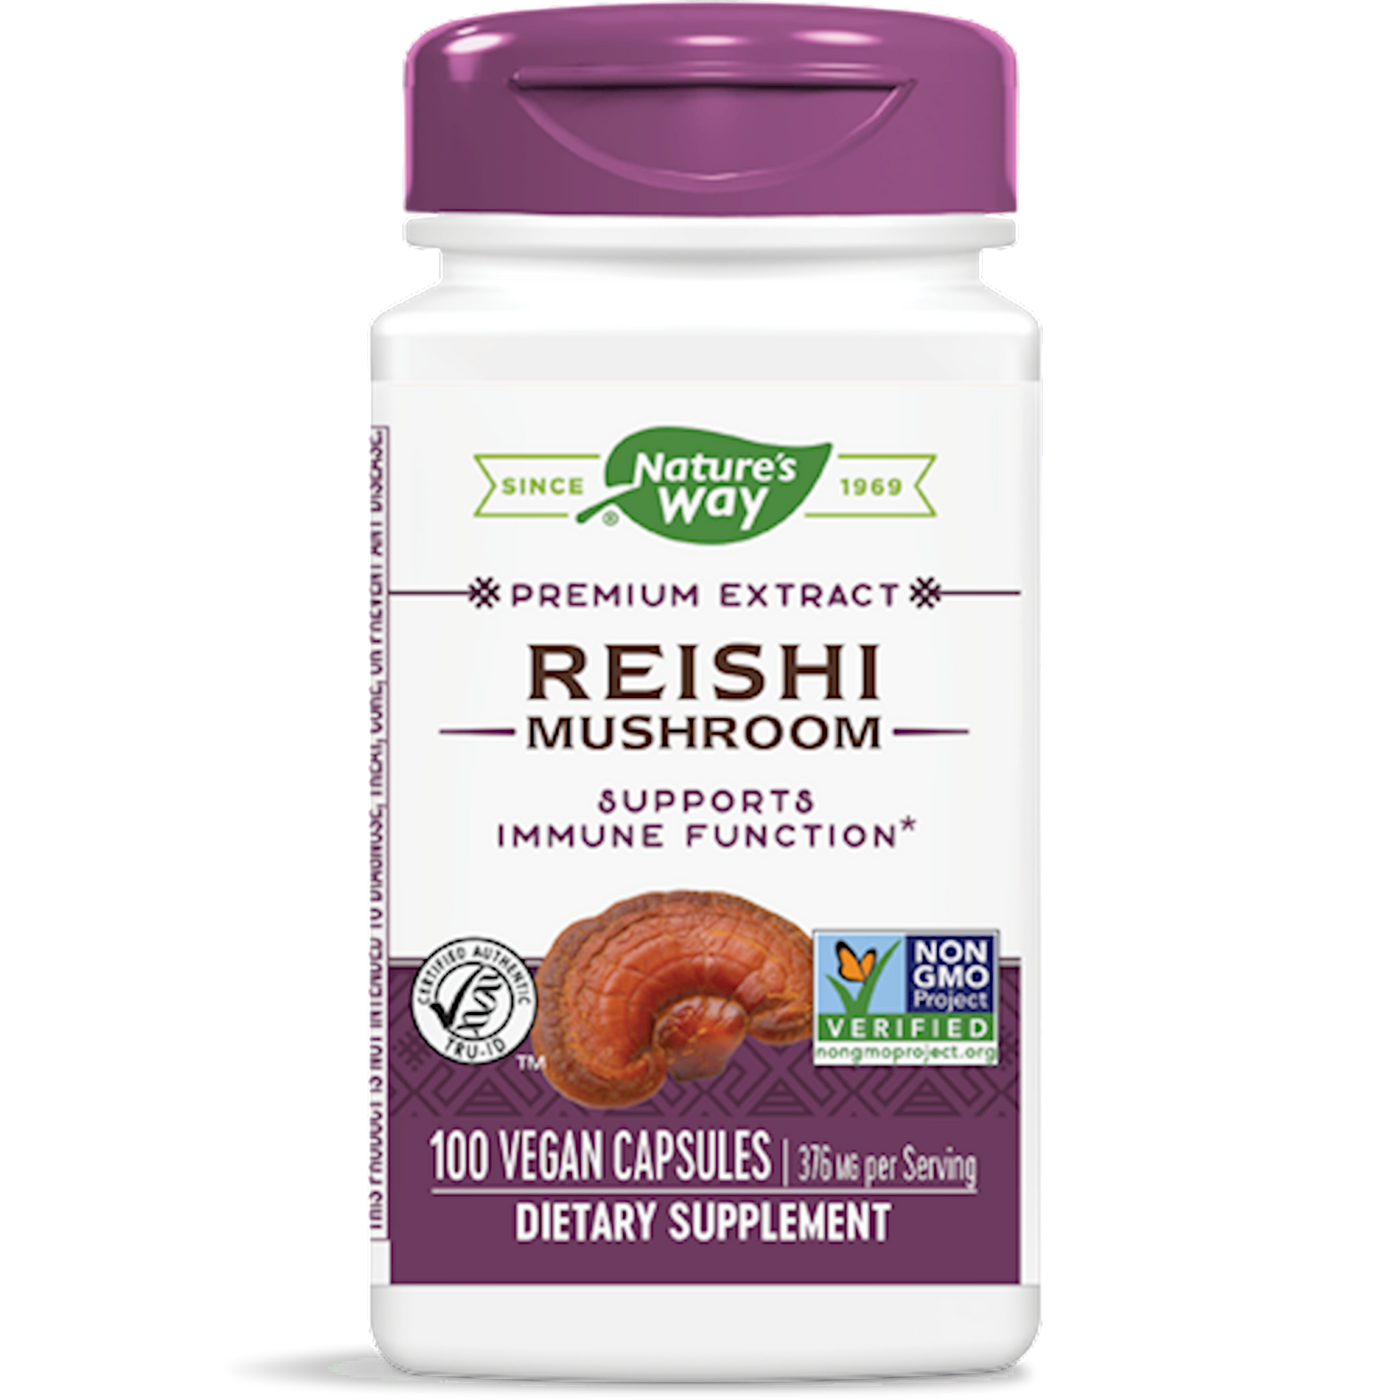 Reishi 100 vegcaps Curated Wellness